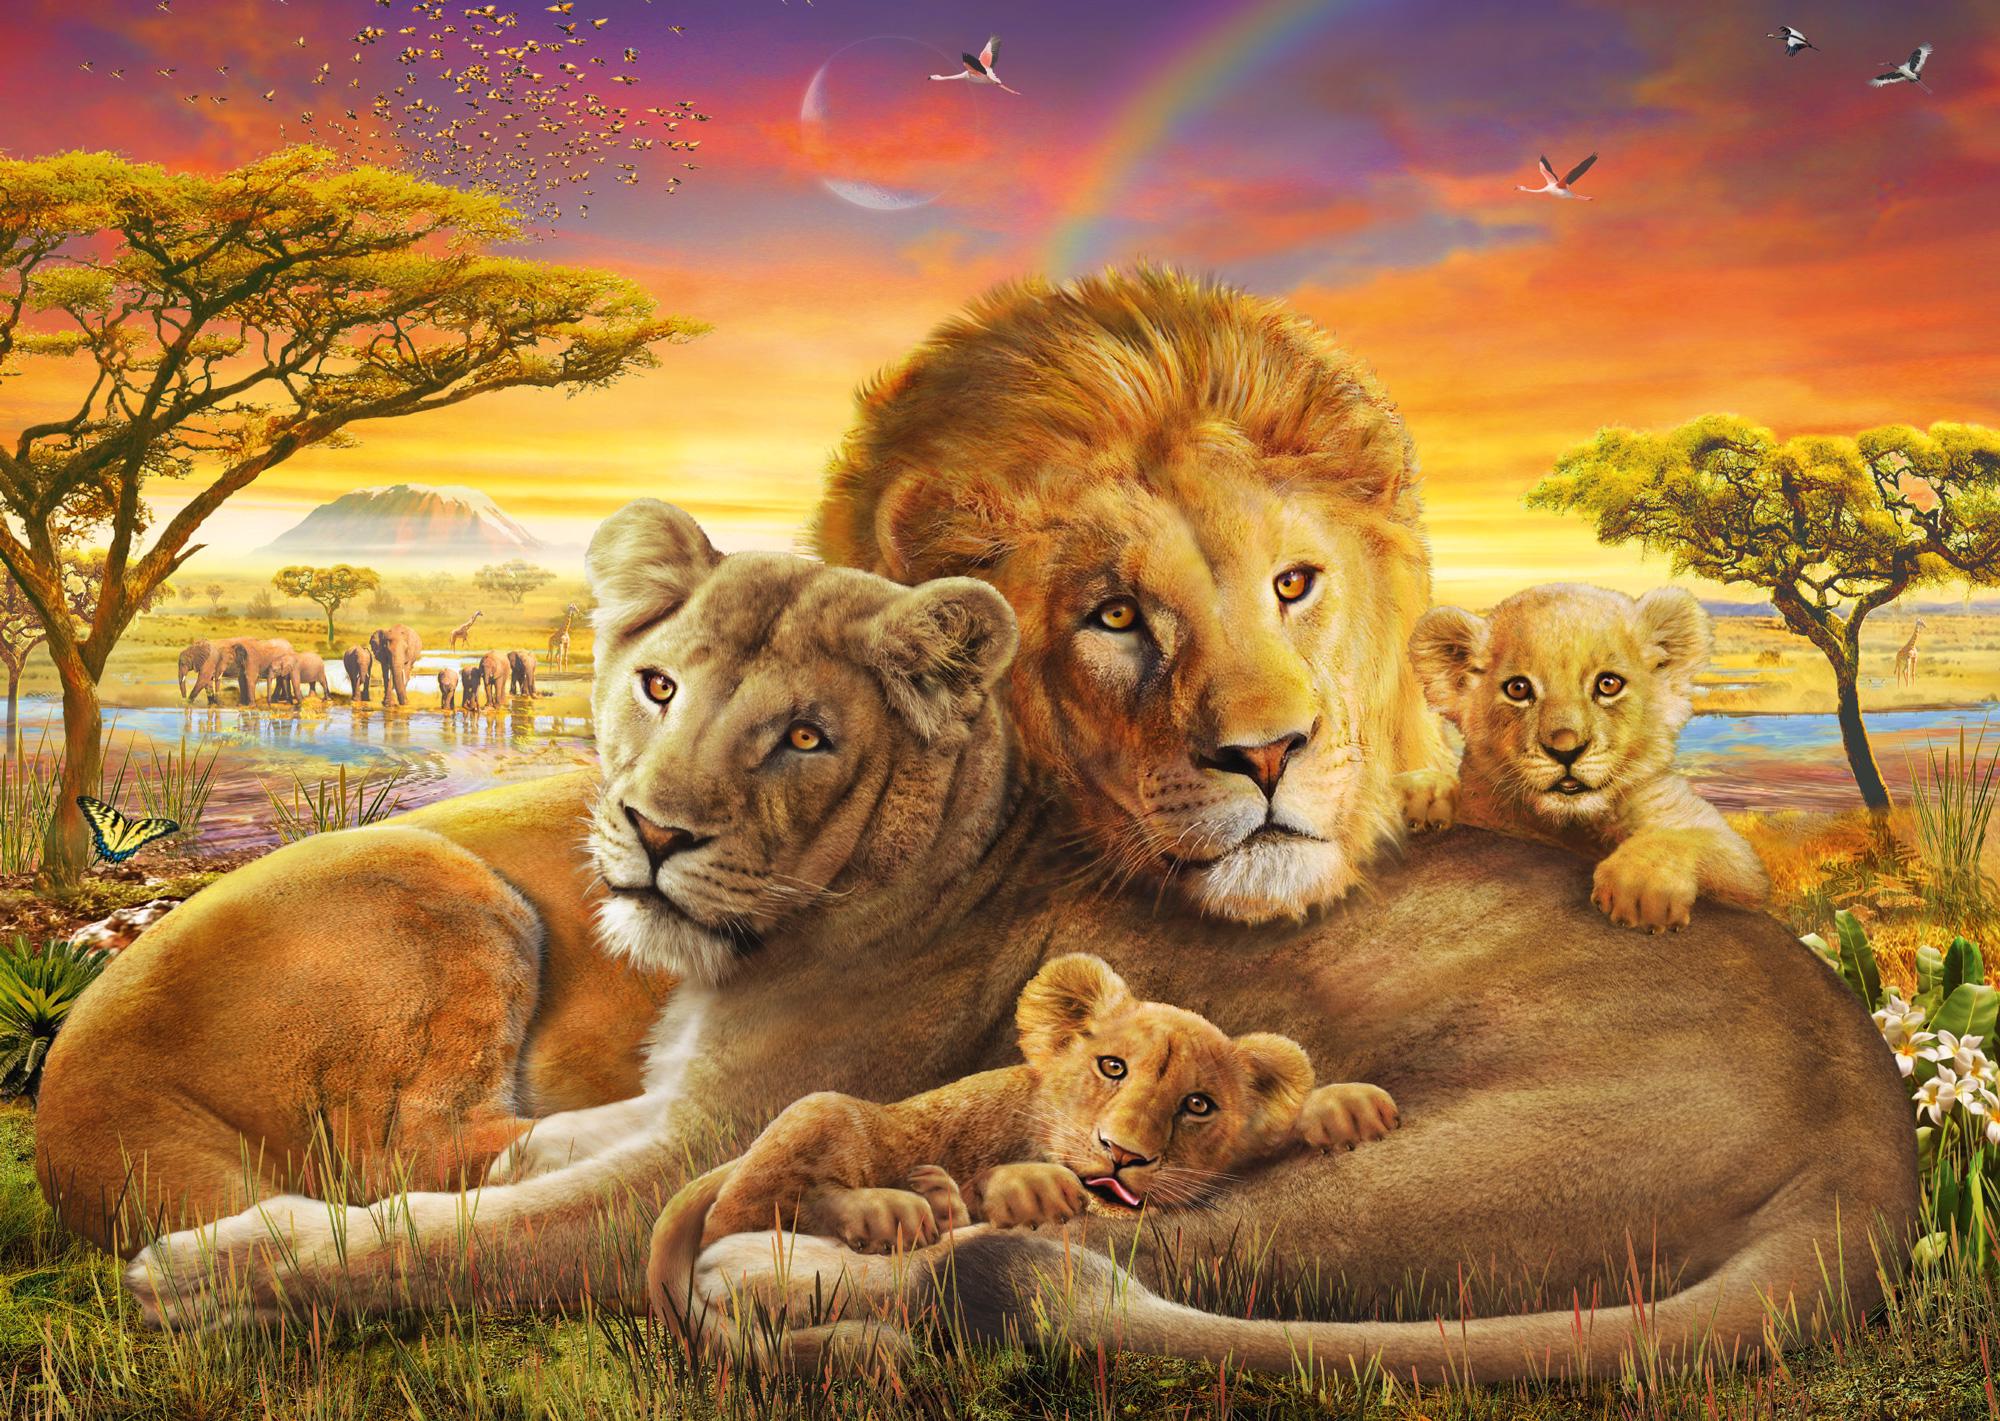 Cuddling lion family 1000